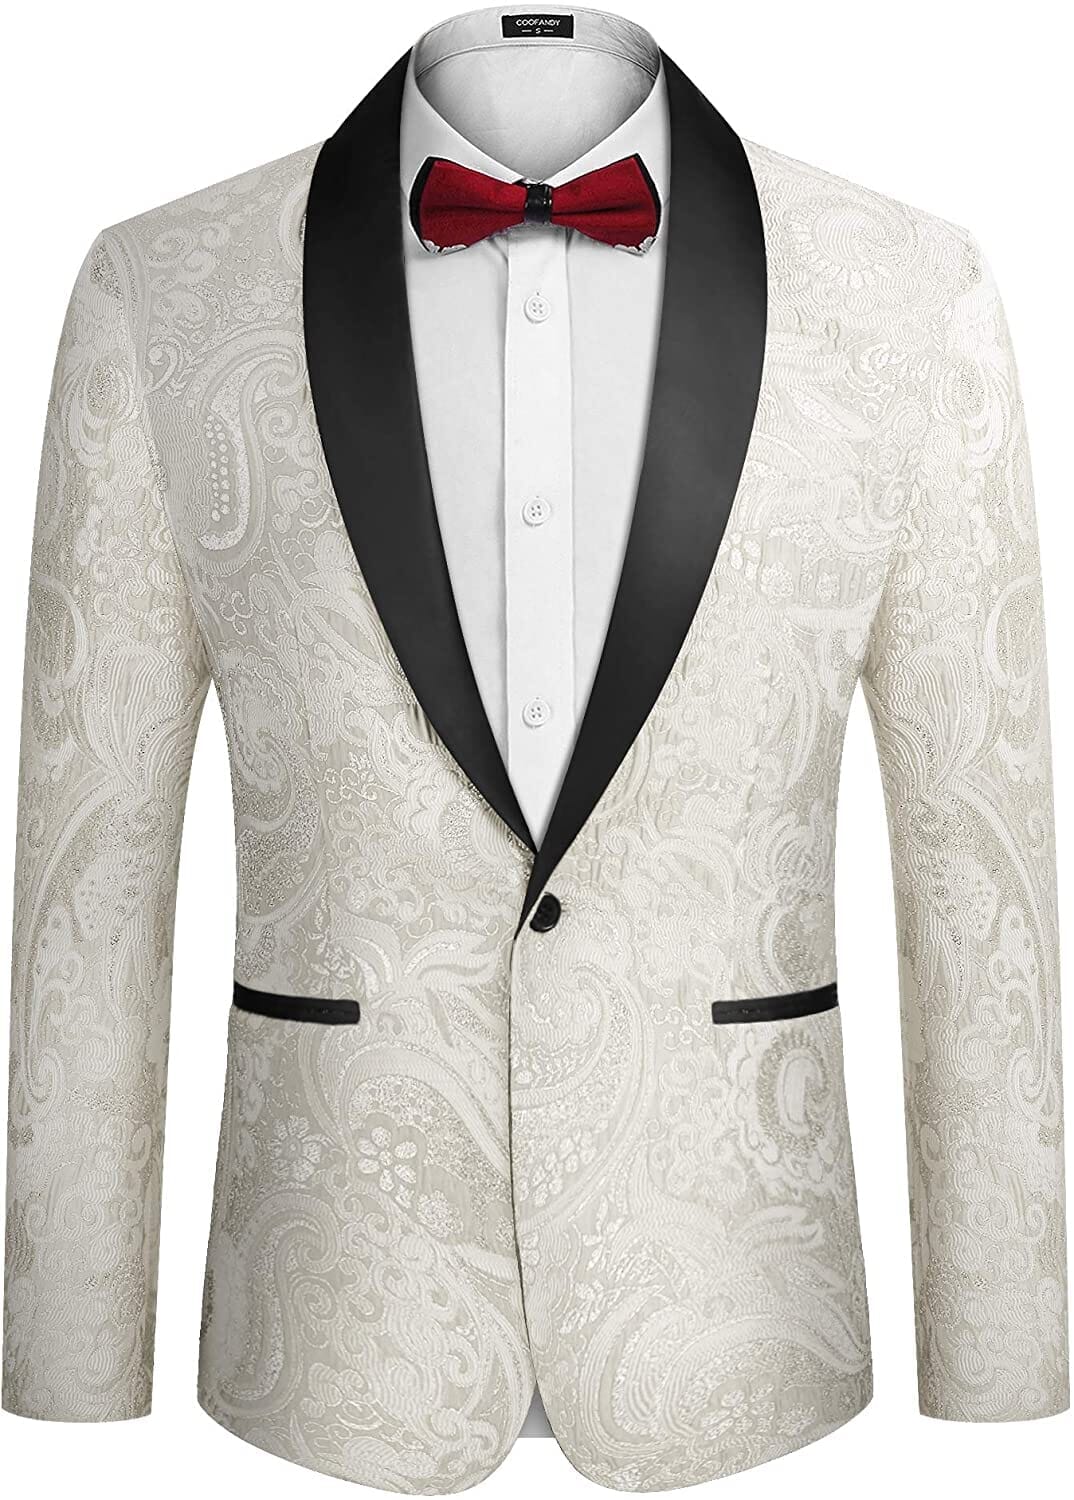 Coofandy Luxury Embroidered Blazer (US Only) Blazer coofandy White S 